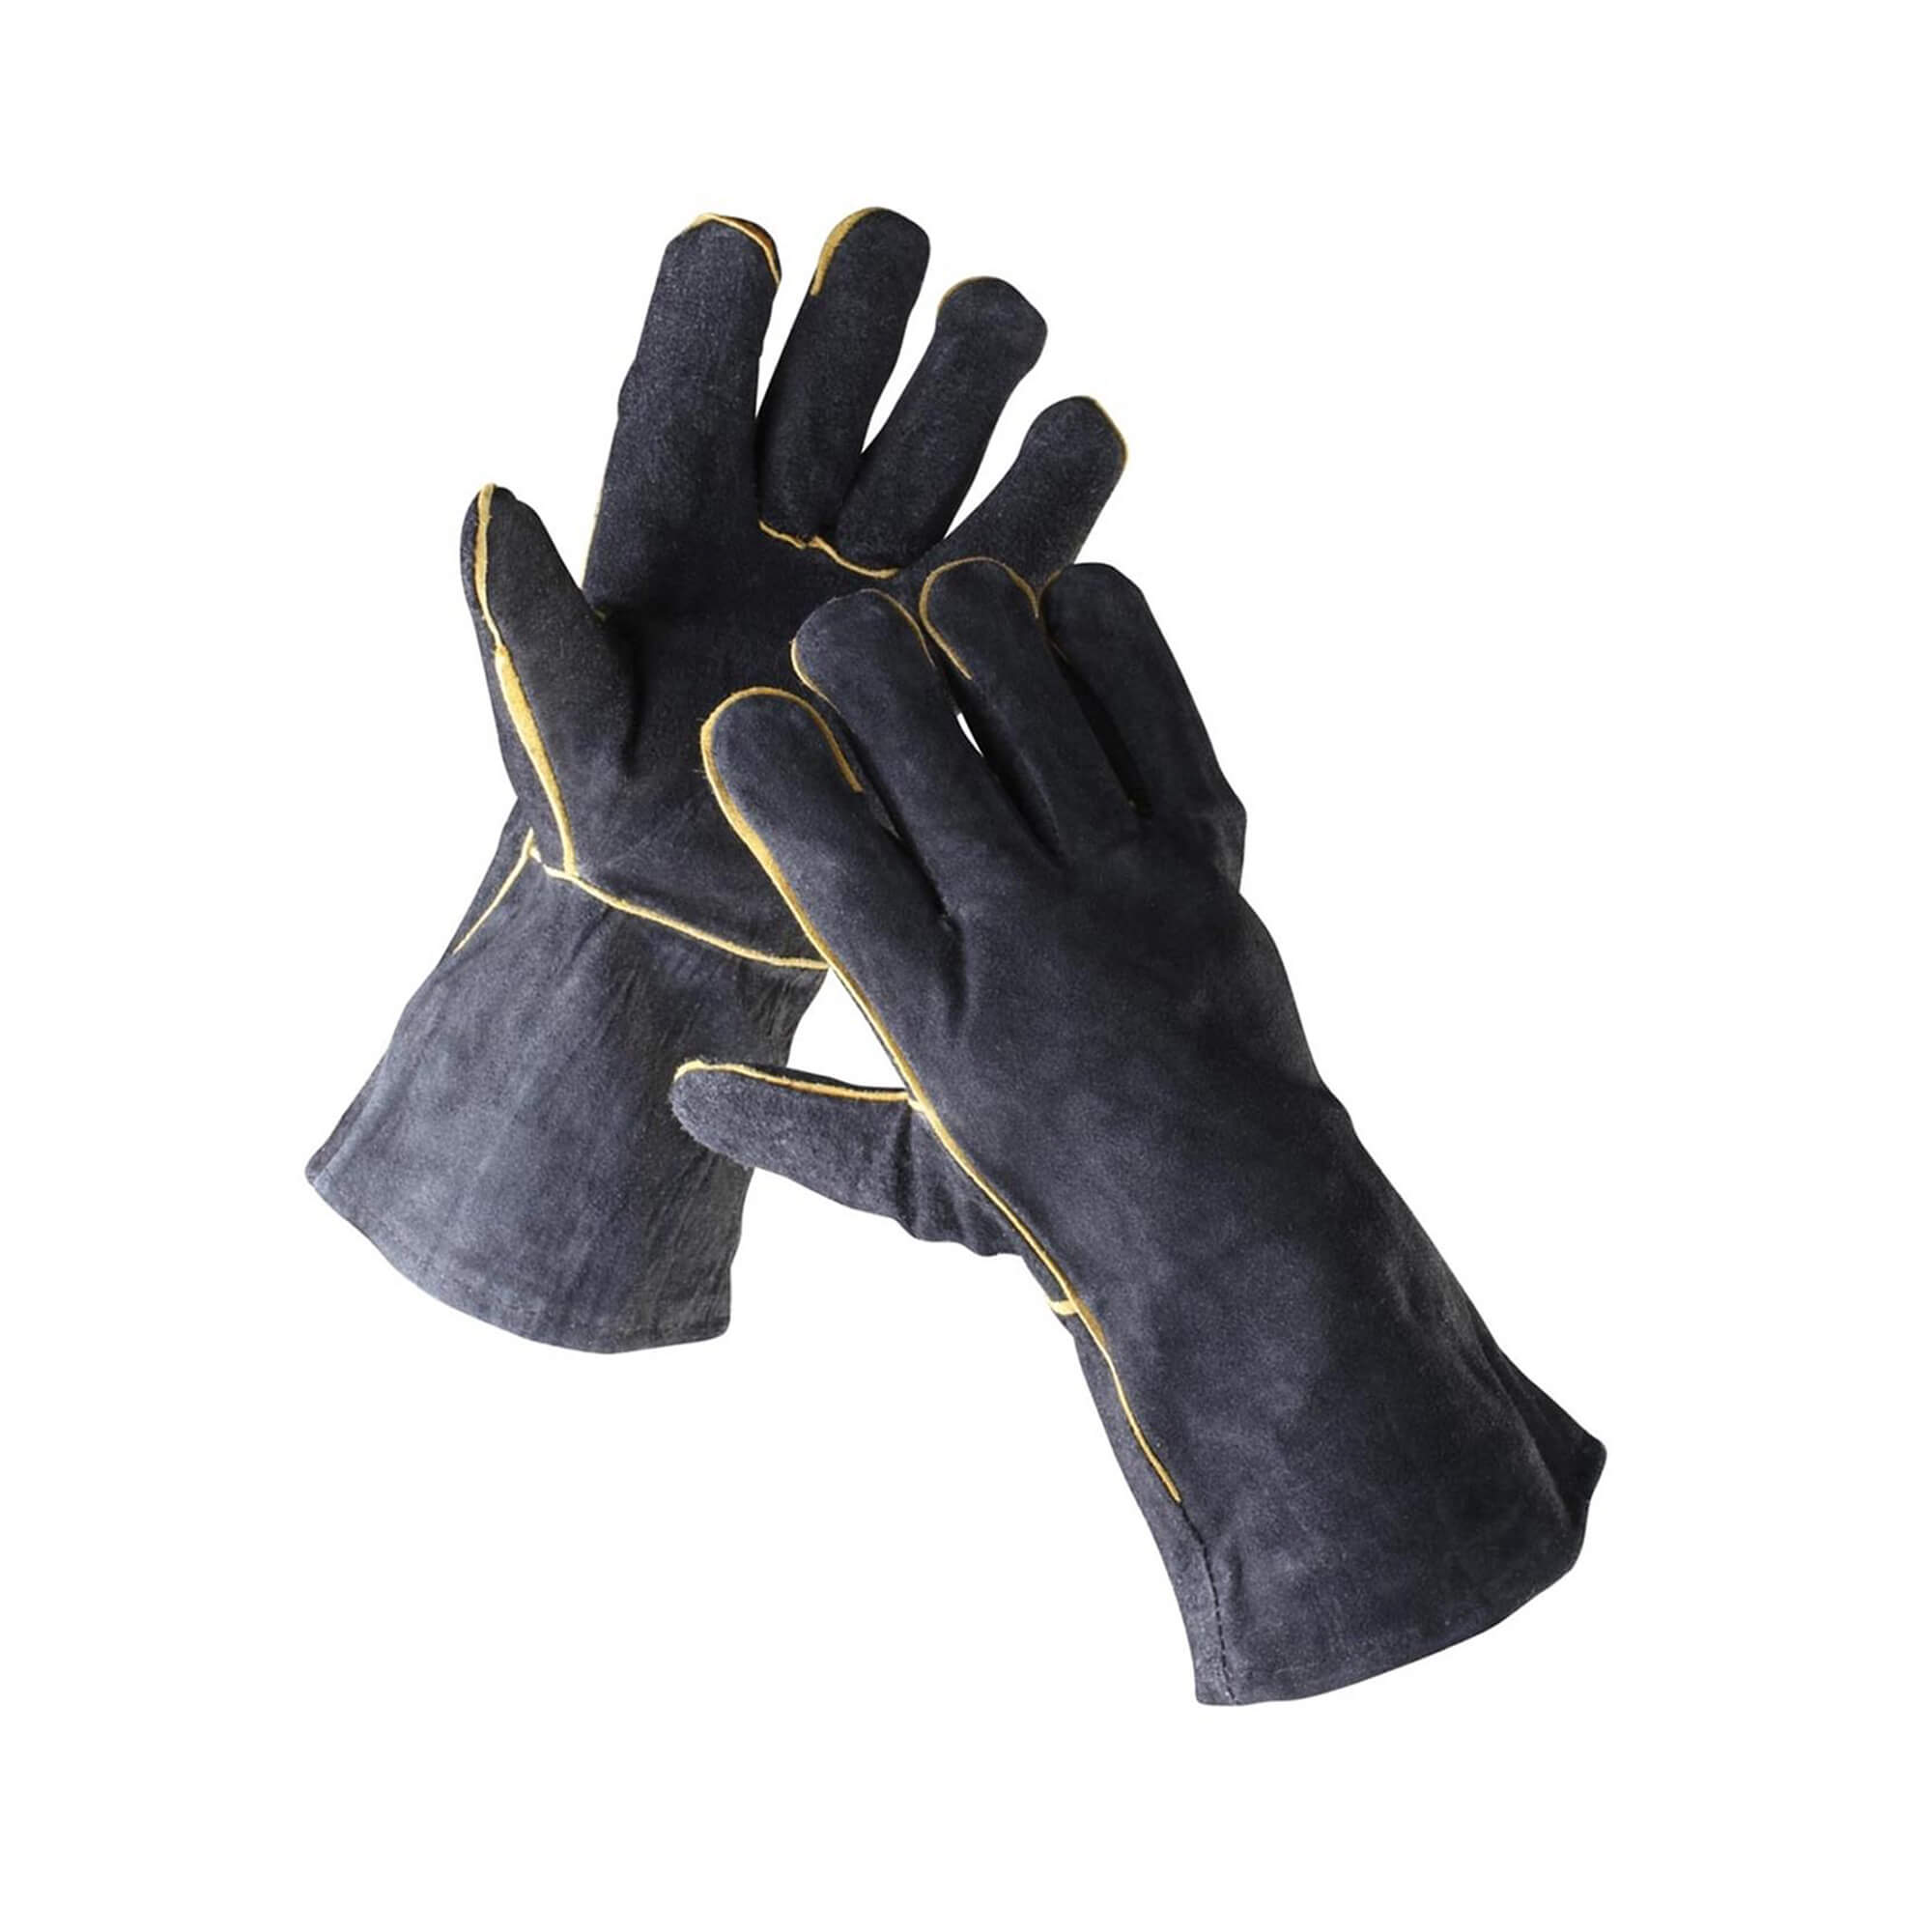 Protective gloves for welders Sandpiper